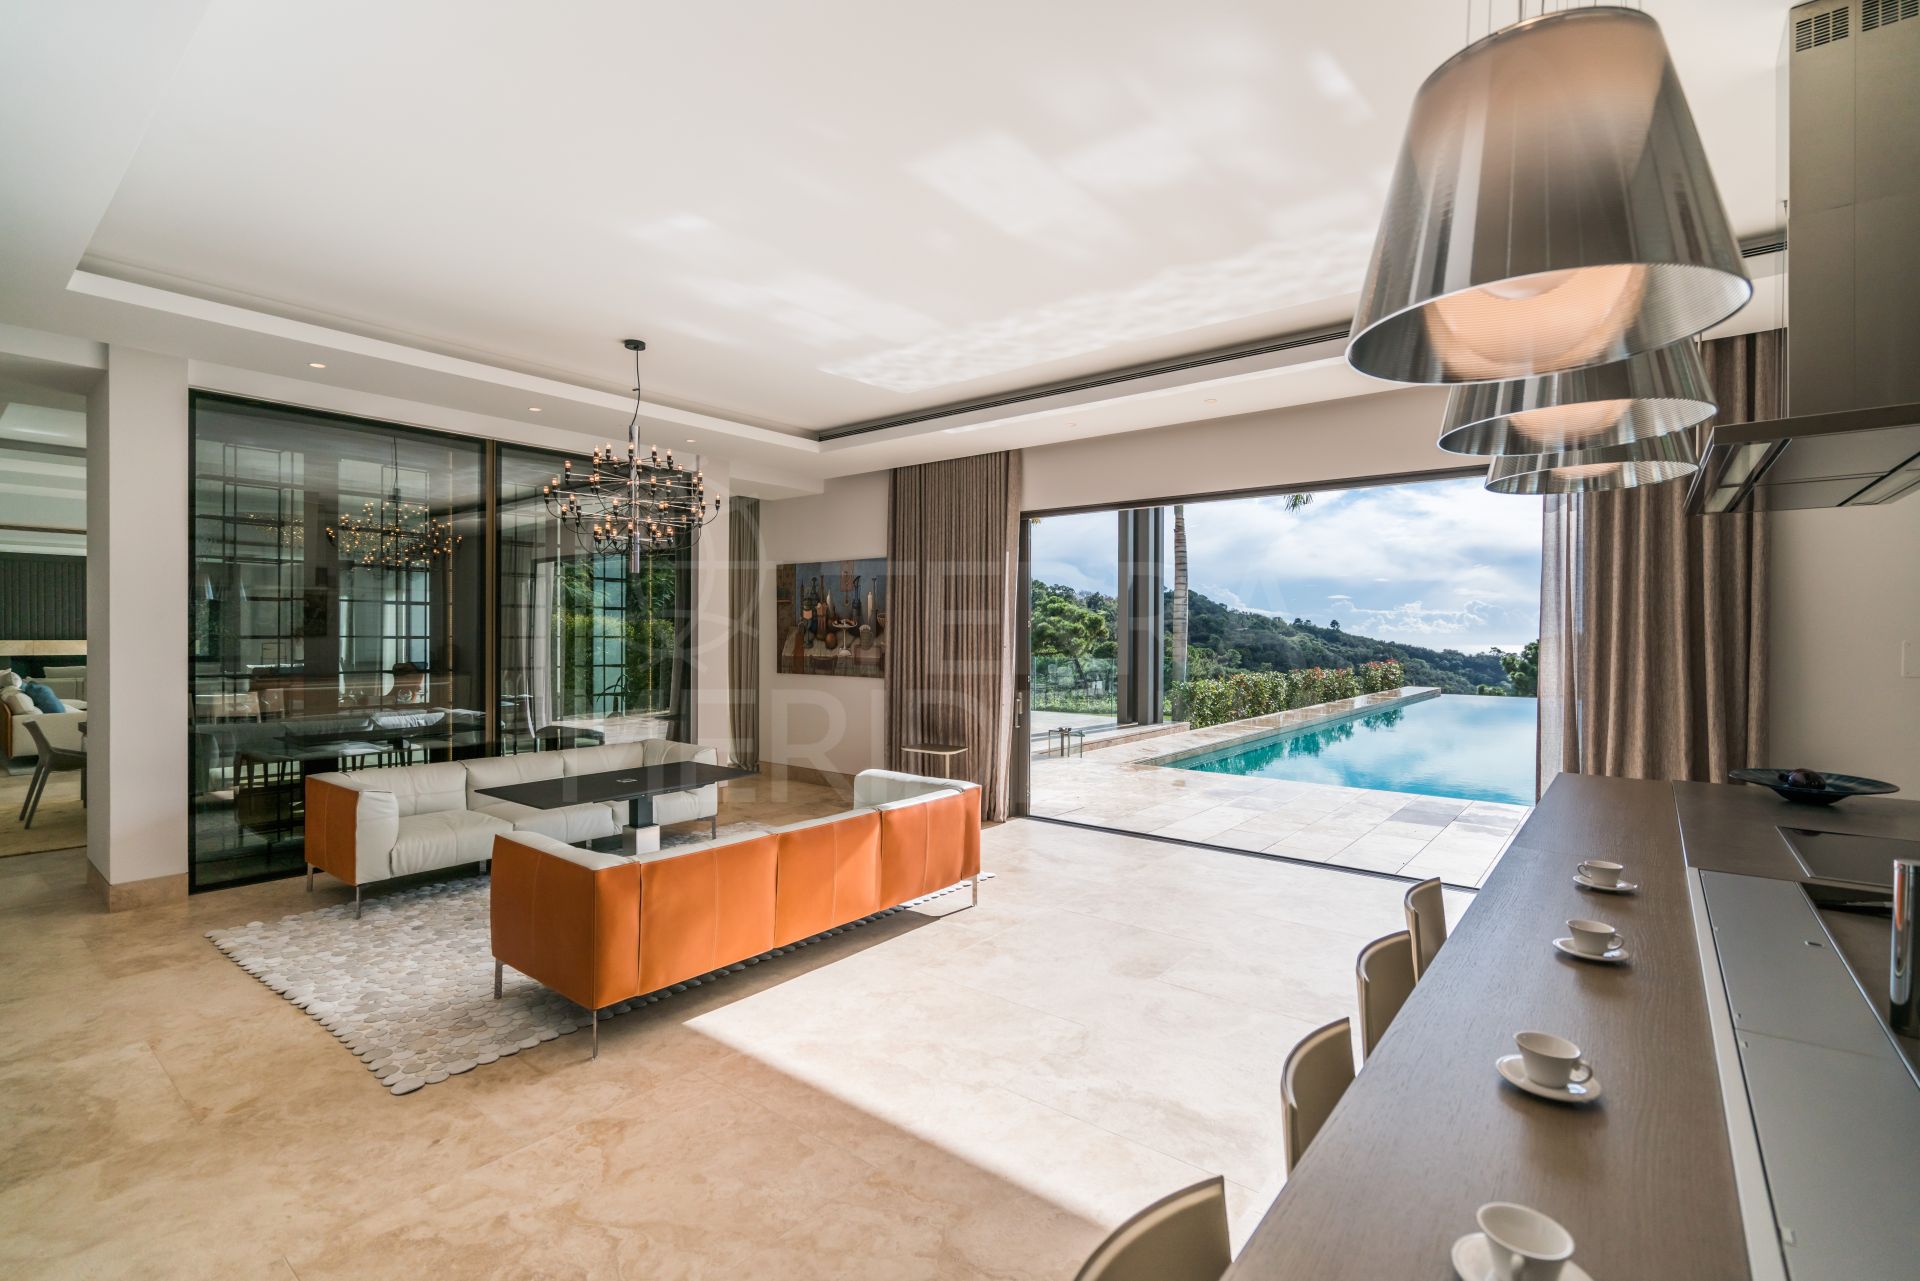 Contemporary new 7 bedroom villa for sale in La Zagaleta, with panoramic views to the sea